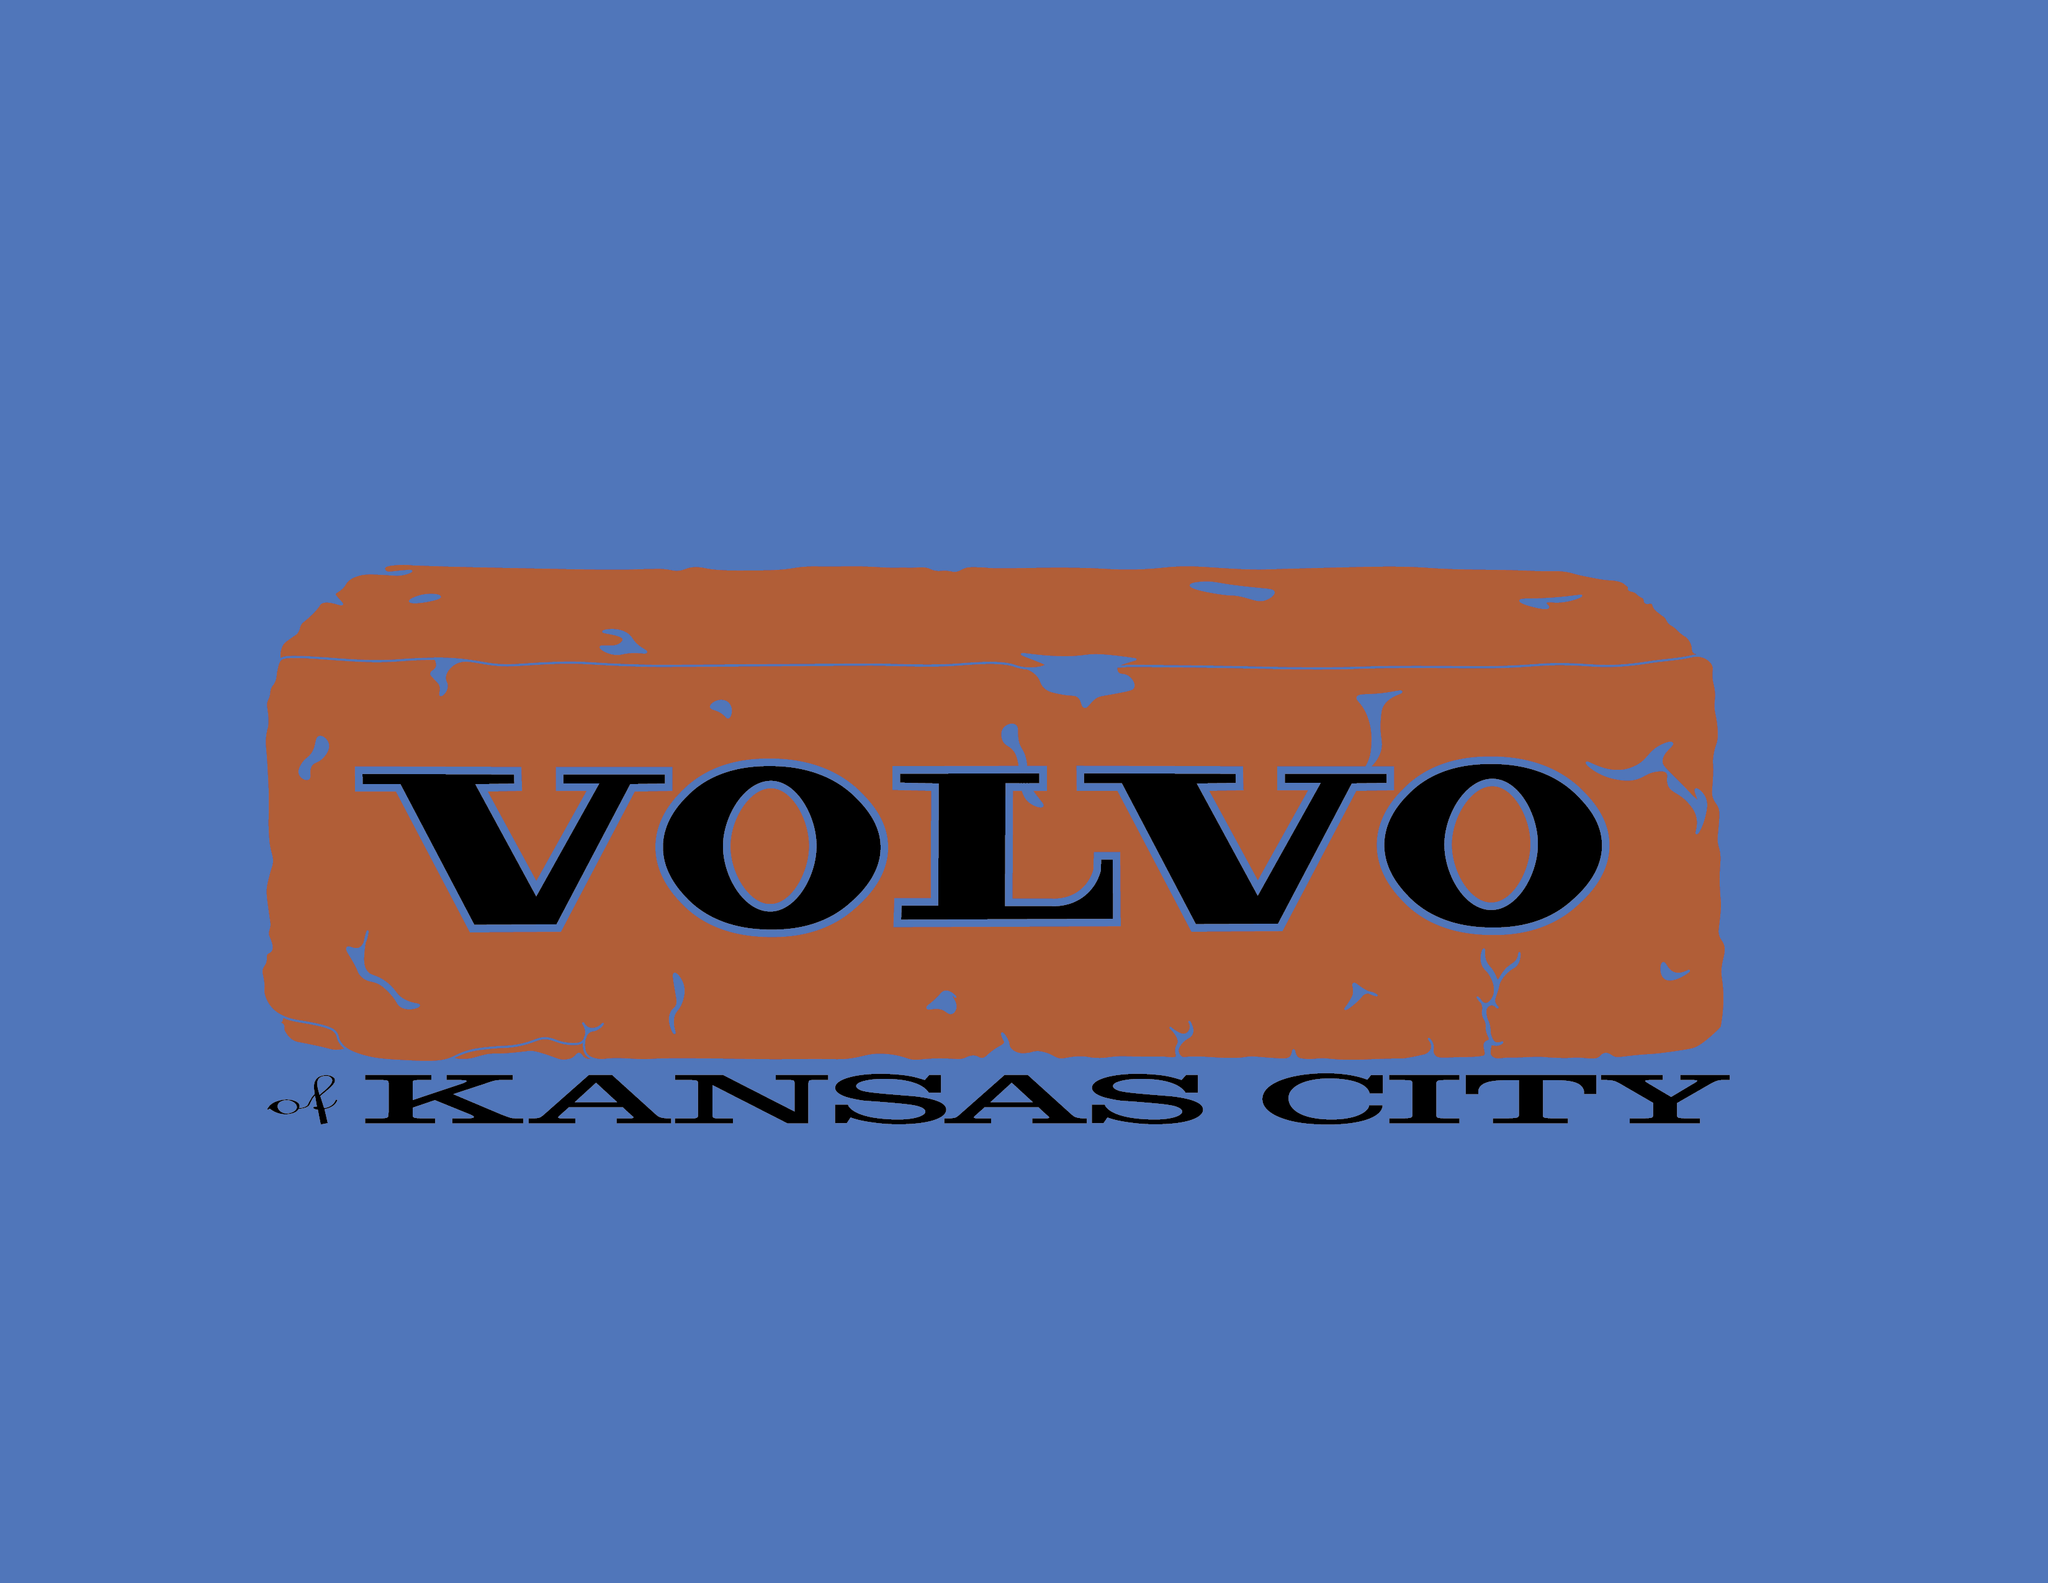 Volvo's of Kansas City Club Brick T-Shirt